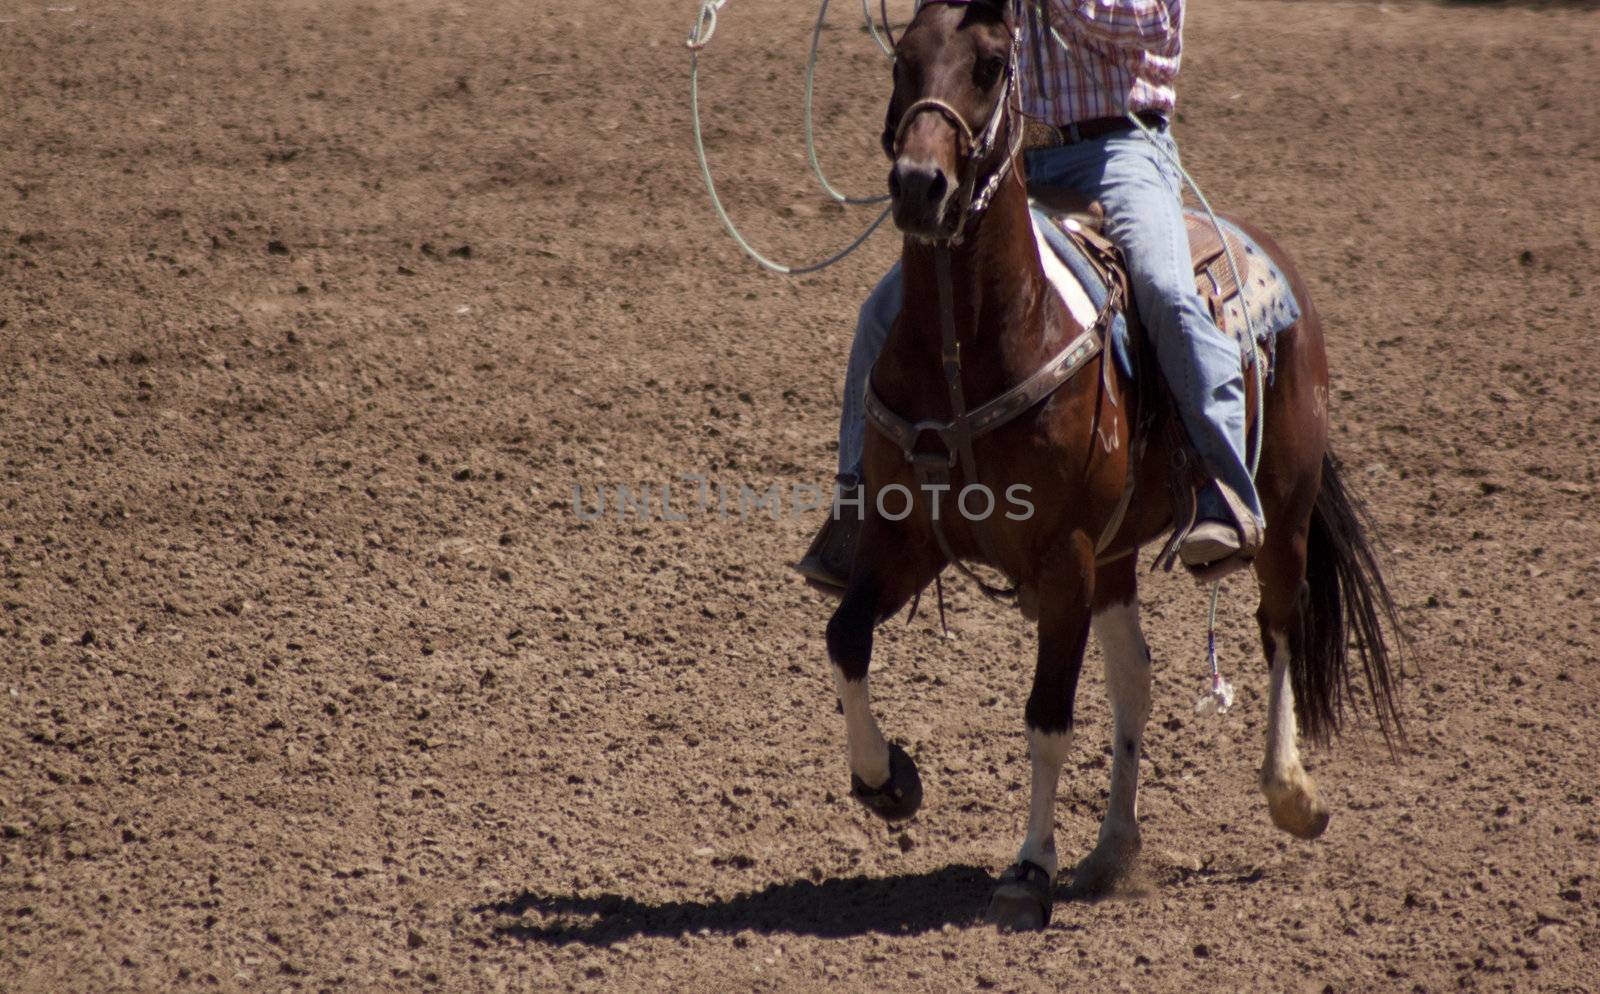 Cowboy on horseback by jeremywhat